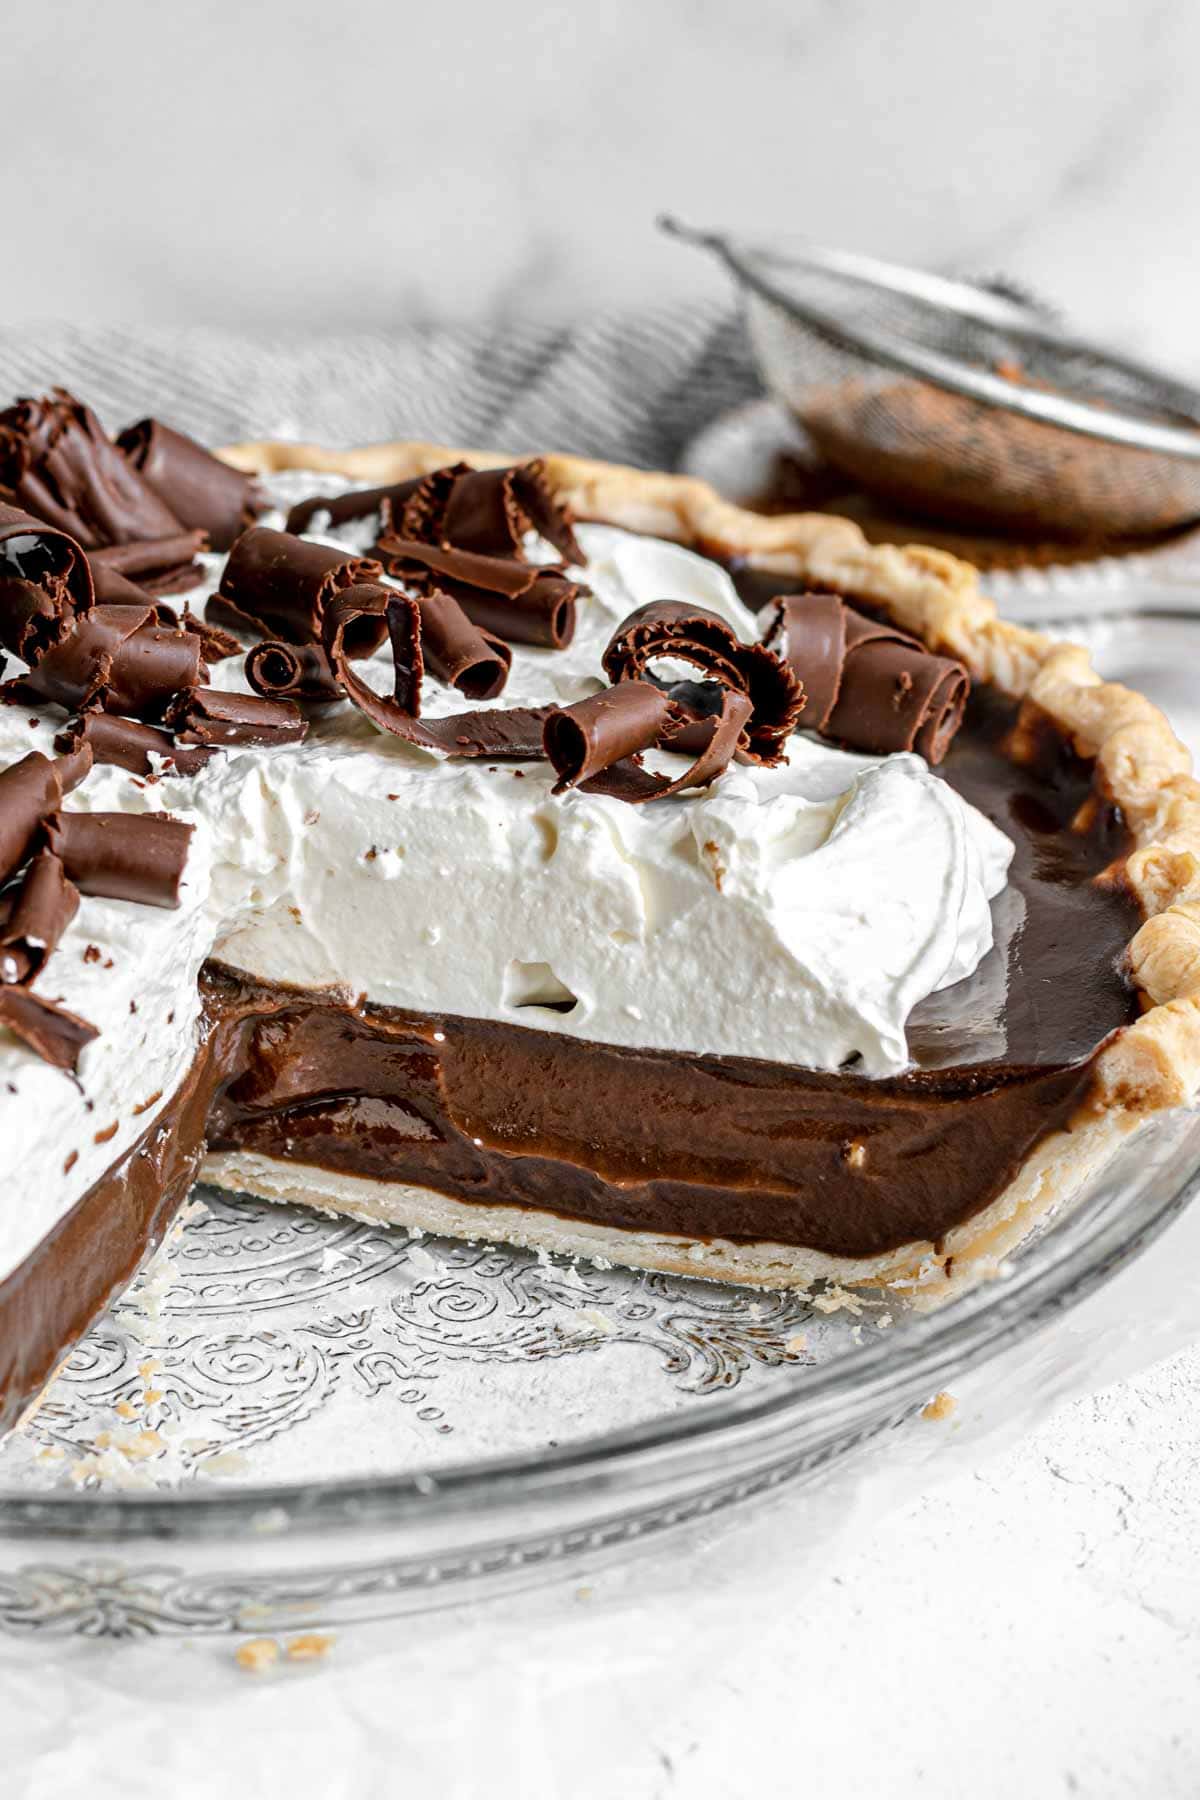 Chocolate Cream Pie with whipped cream and chocolate shavings in pie dish